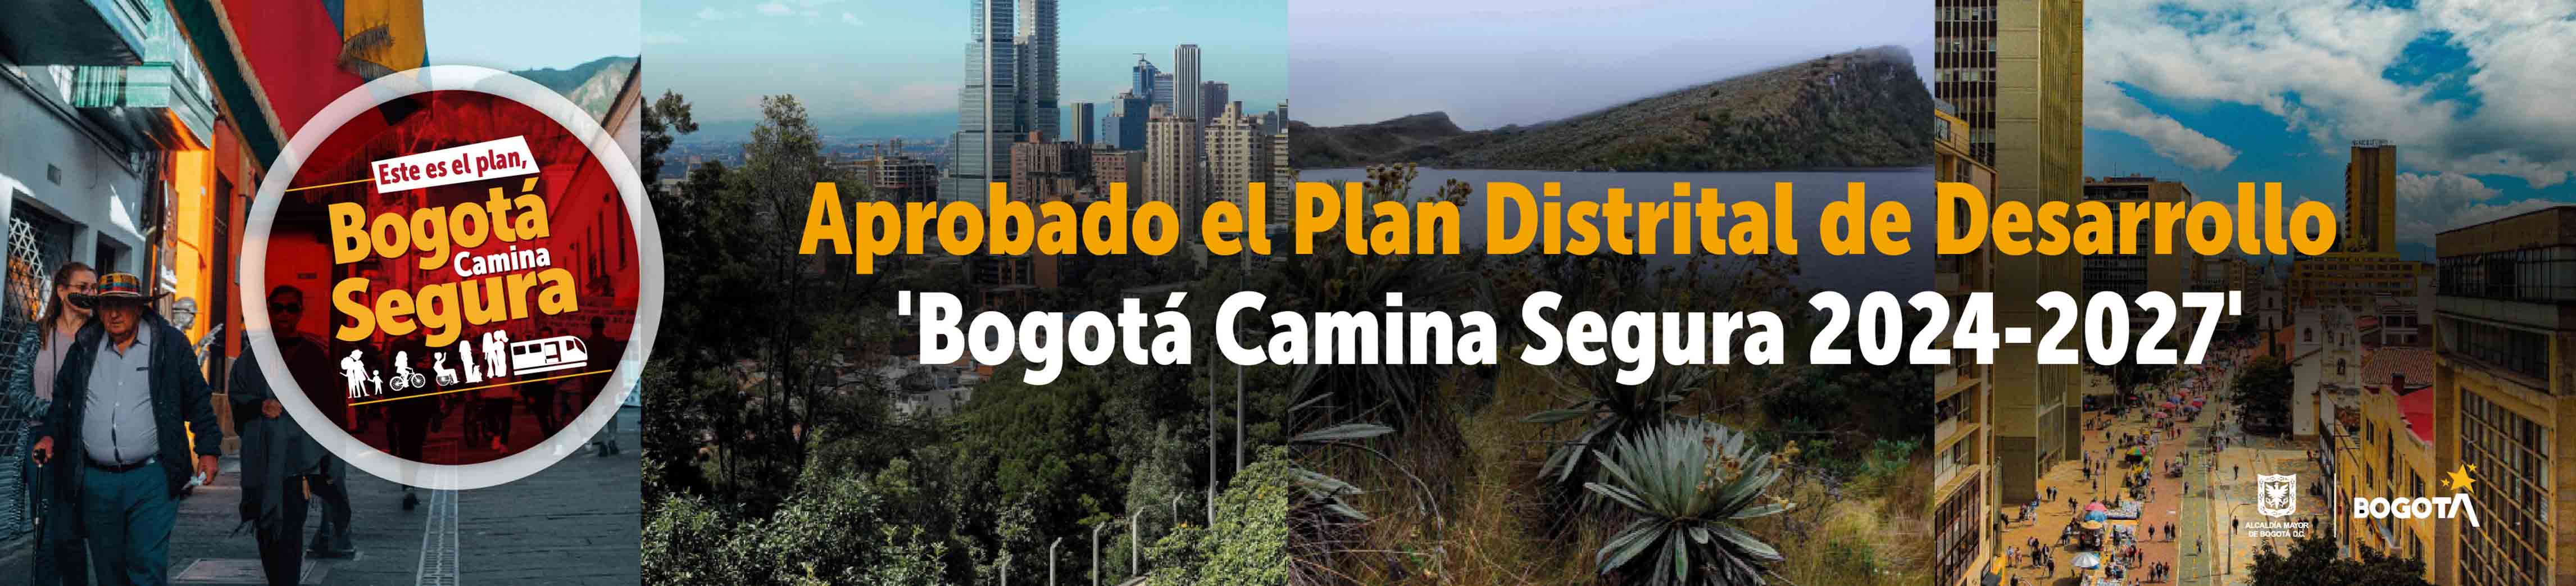 Plan Distrital de Desarrollo Bogotá Camina Segura